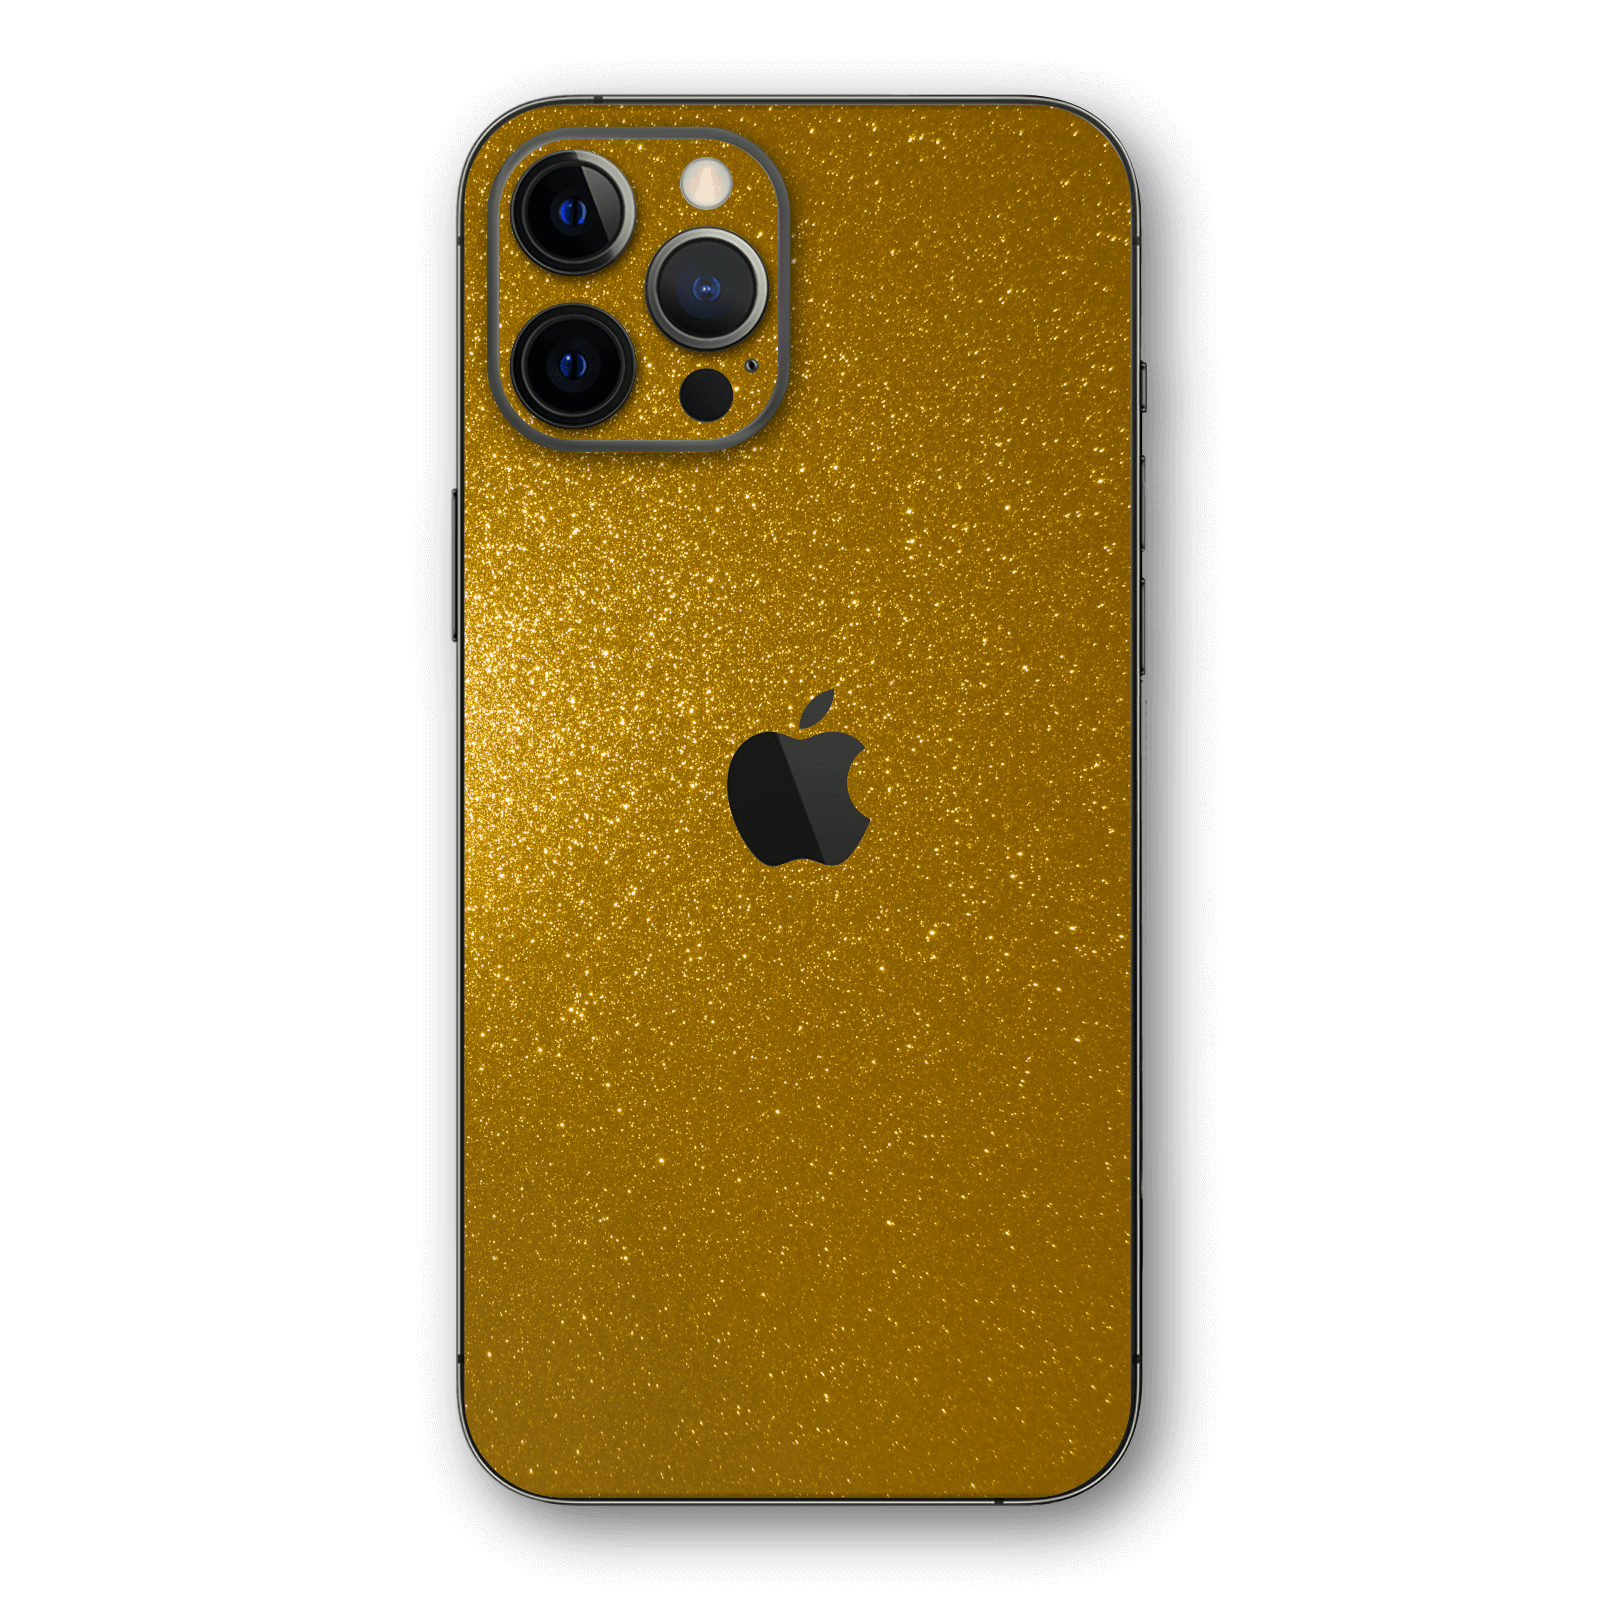 Iphone 12 Pro Max Diamond Gold Skin Wrap Easyskinz